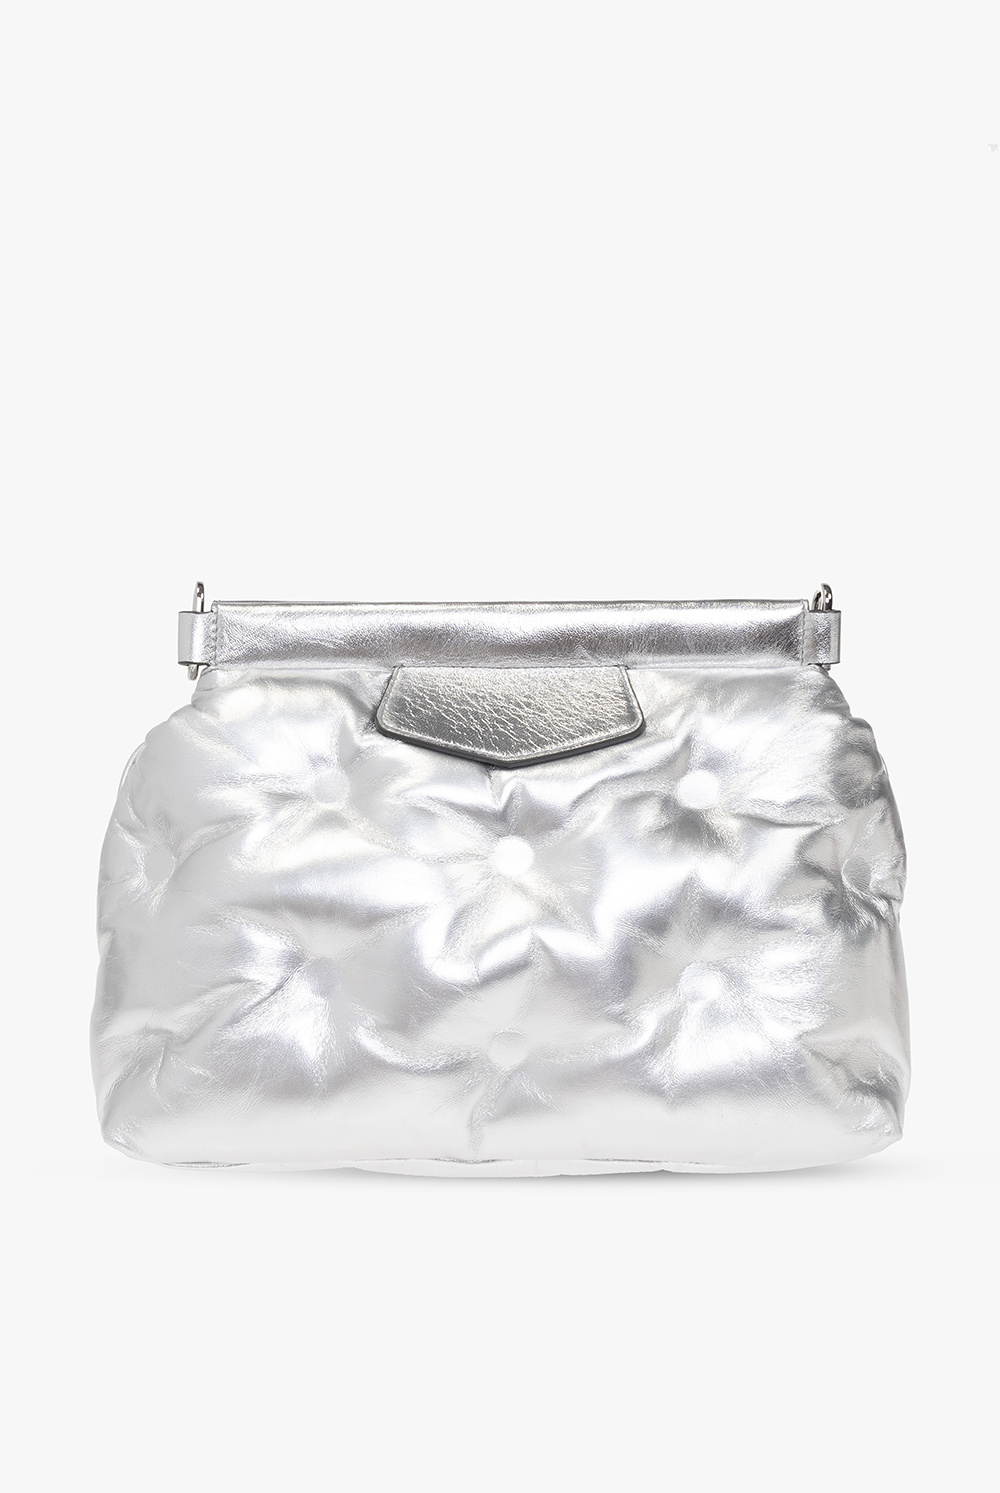 Maison Margiela ‘Glam Slam’ shoulder 26cm bag